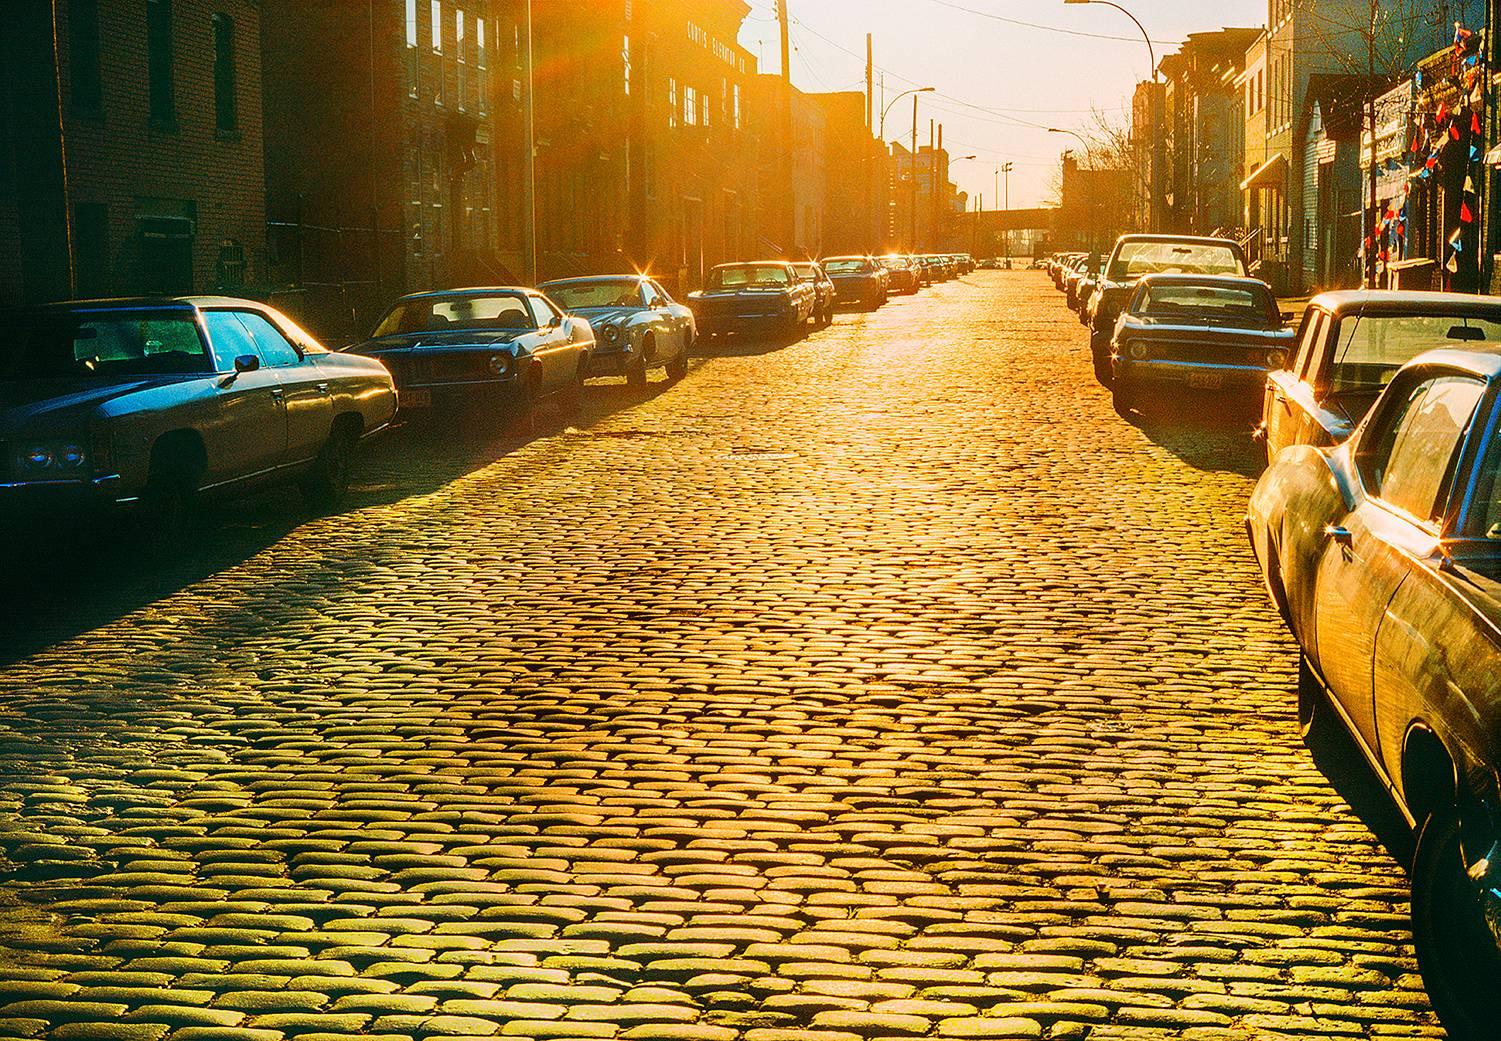 Crochet rouge « Yellow Brick Road » (Route de brique jaune), Brooklyn 